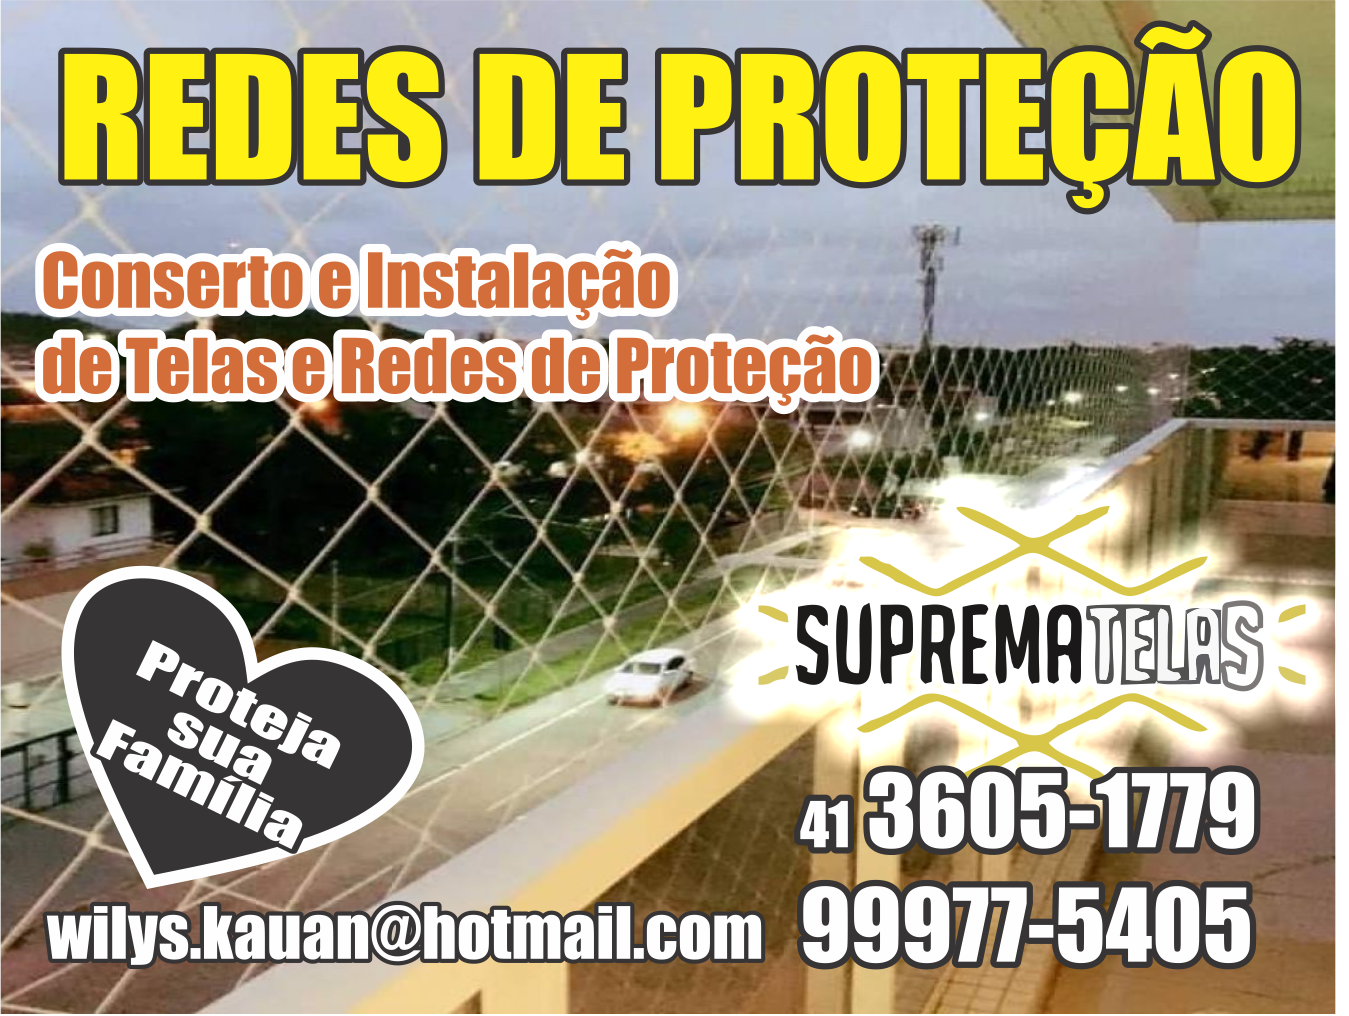 Suprematelas Redes de Proteção      RUA EVA WEIGERT DE SOUZA, 65, COLOMBO - PR  Fones: (41)3605-1779 / (41) 9977-5405